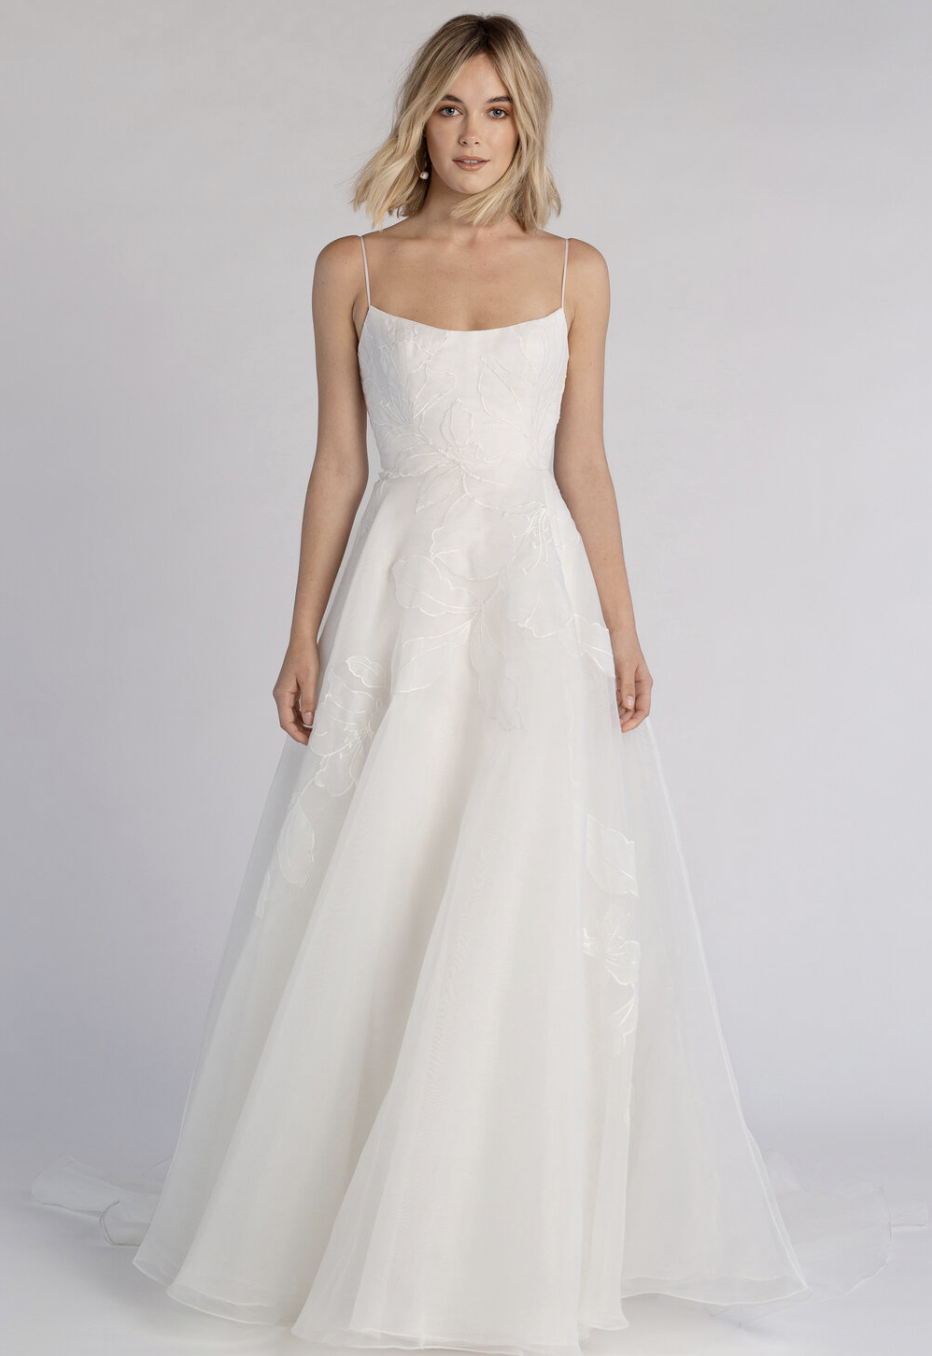 Jenny Yoo Bridal Bridal Dresses | The White Dress by the Shore